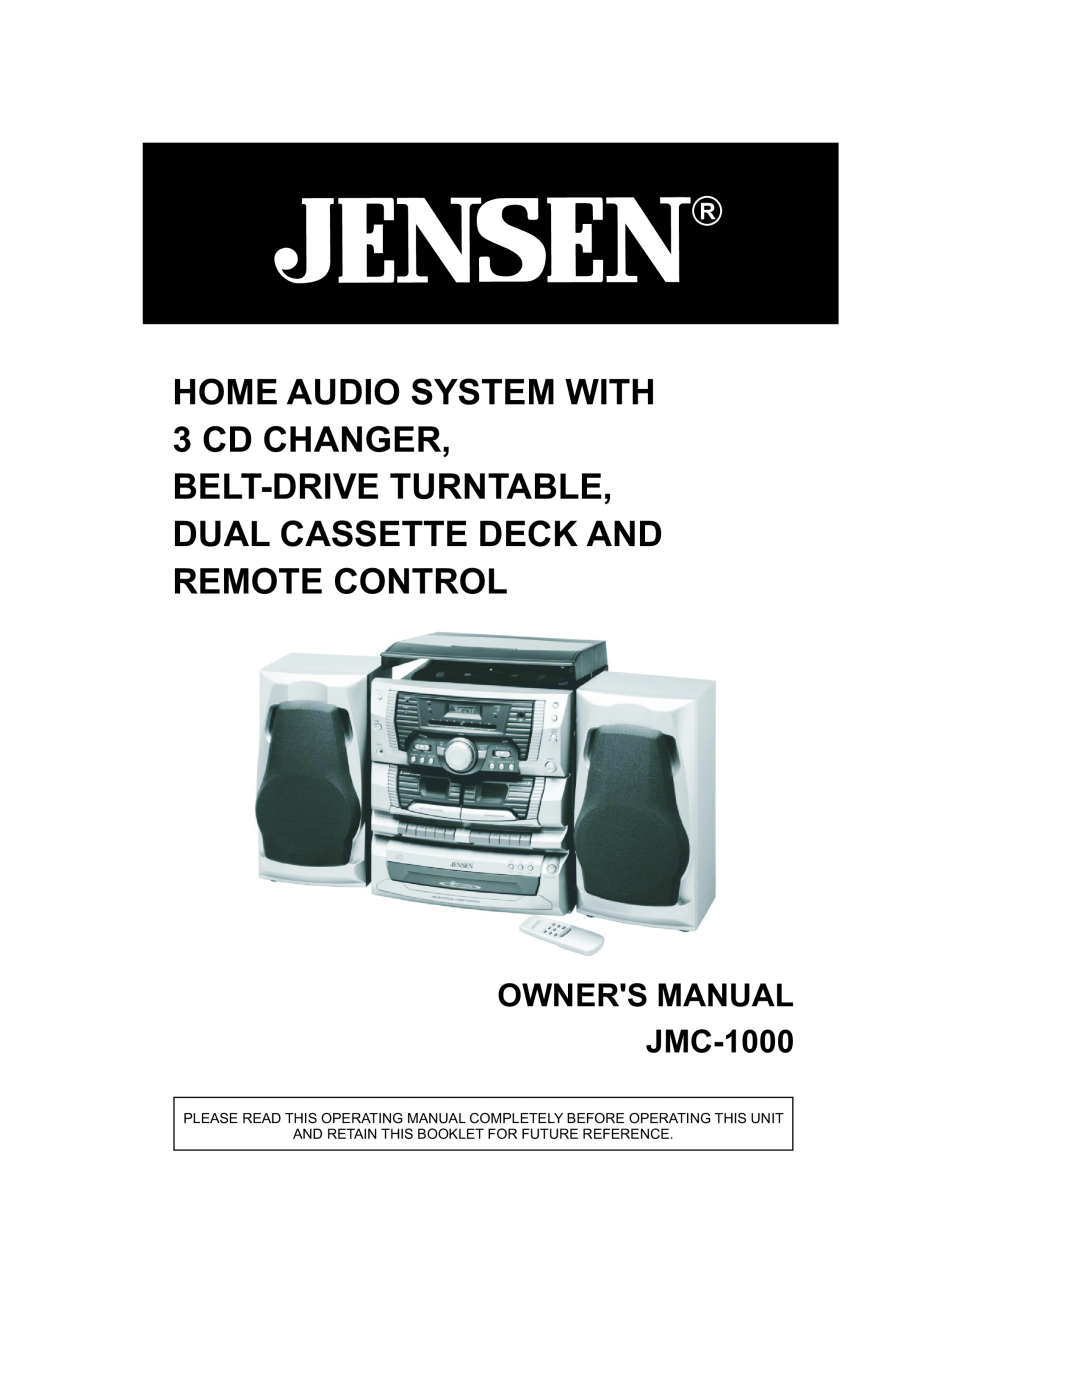 Jensen manual OWNERSMANUAL JMC-1000 